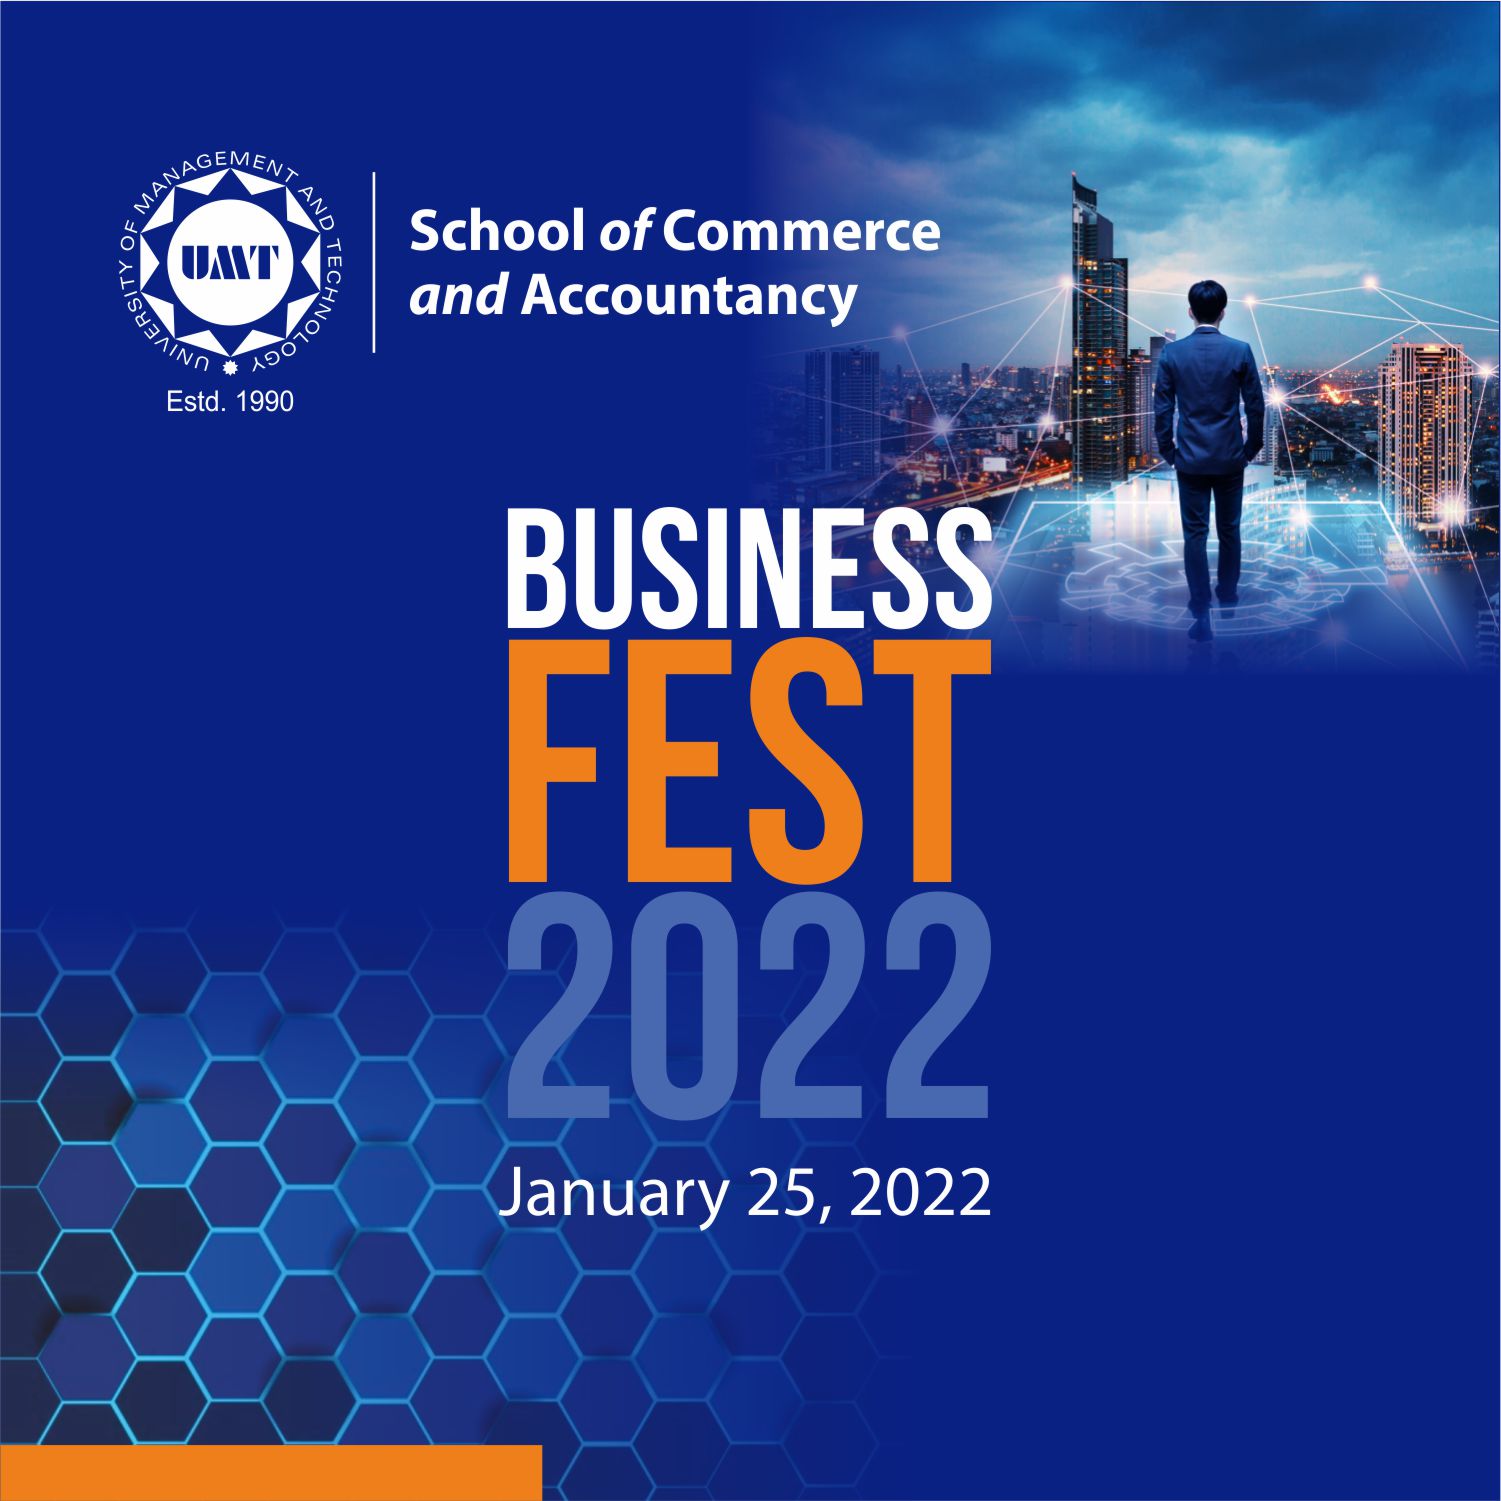 Business Fest 2022